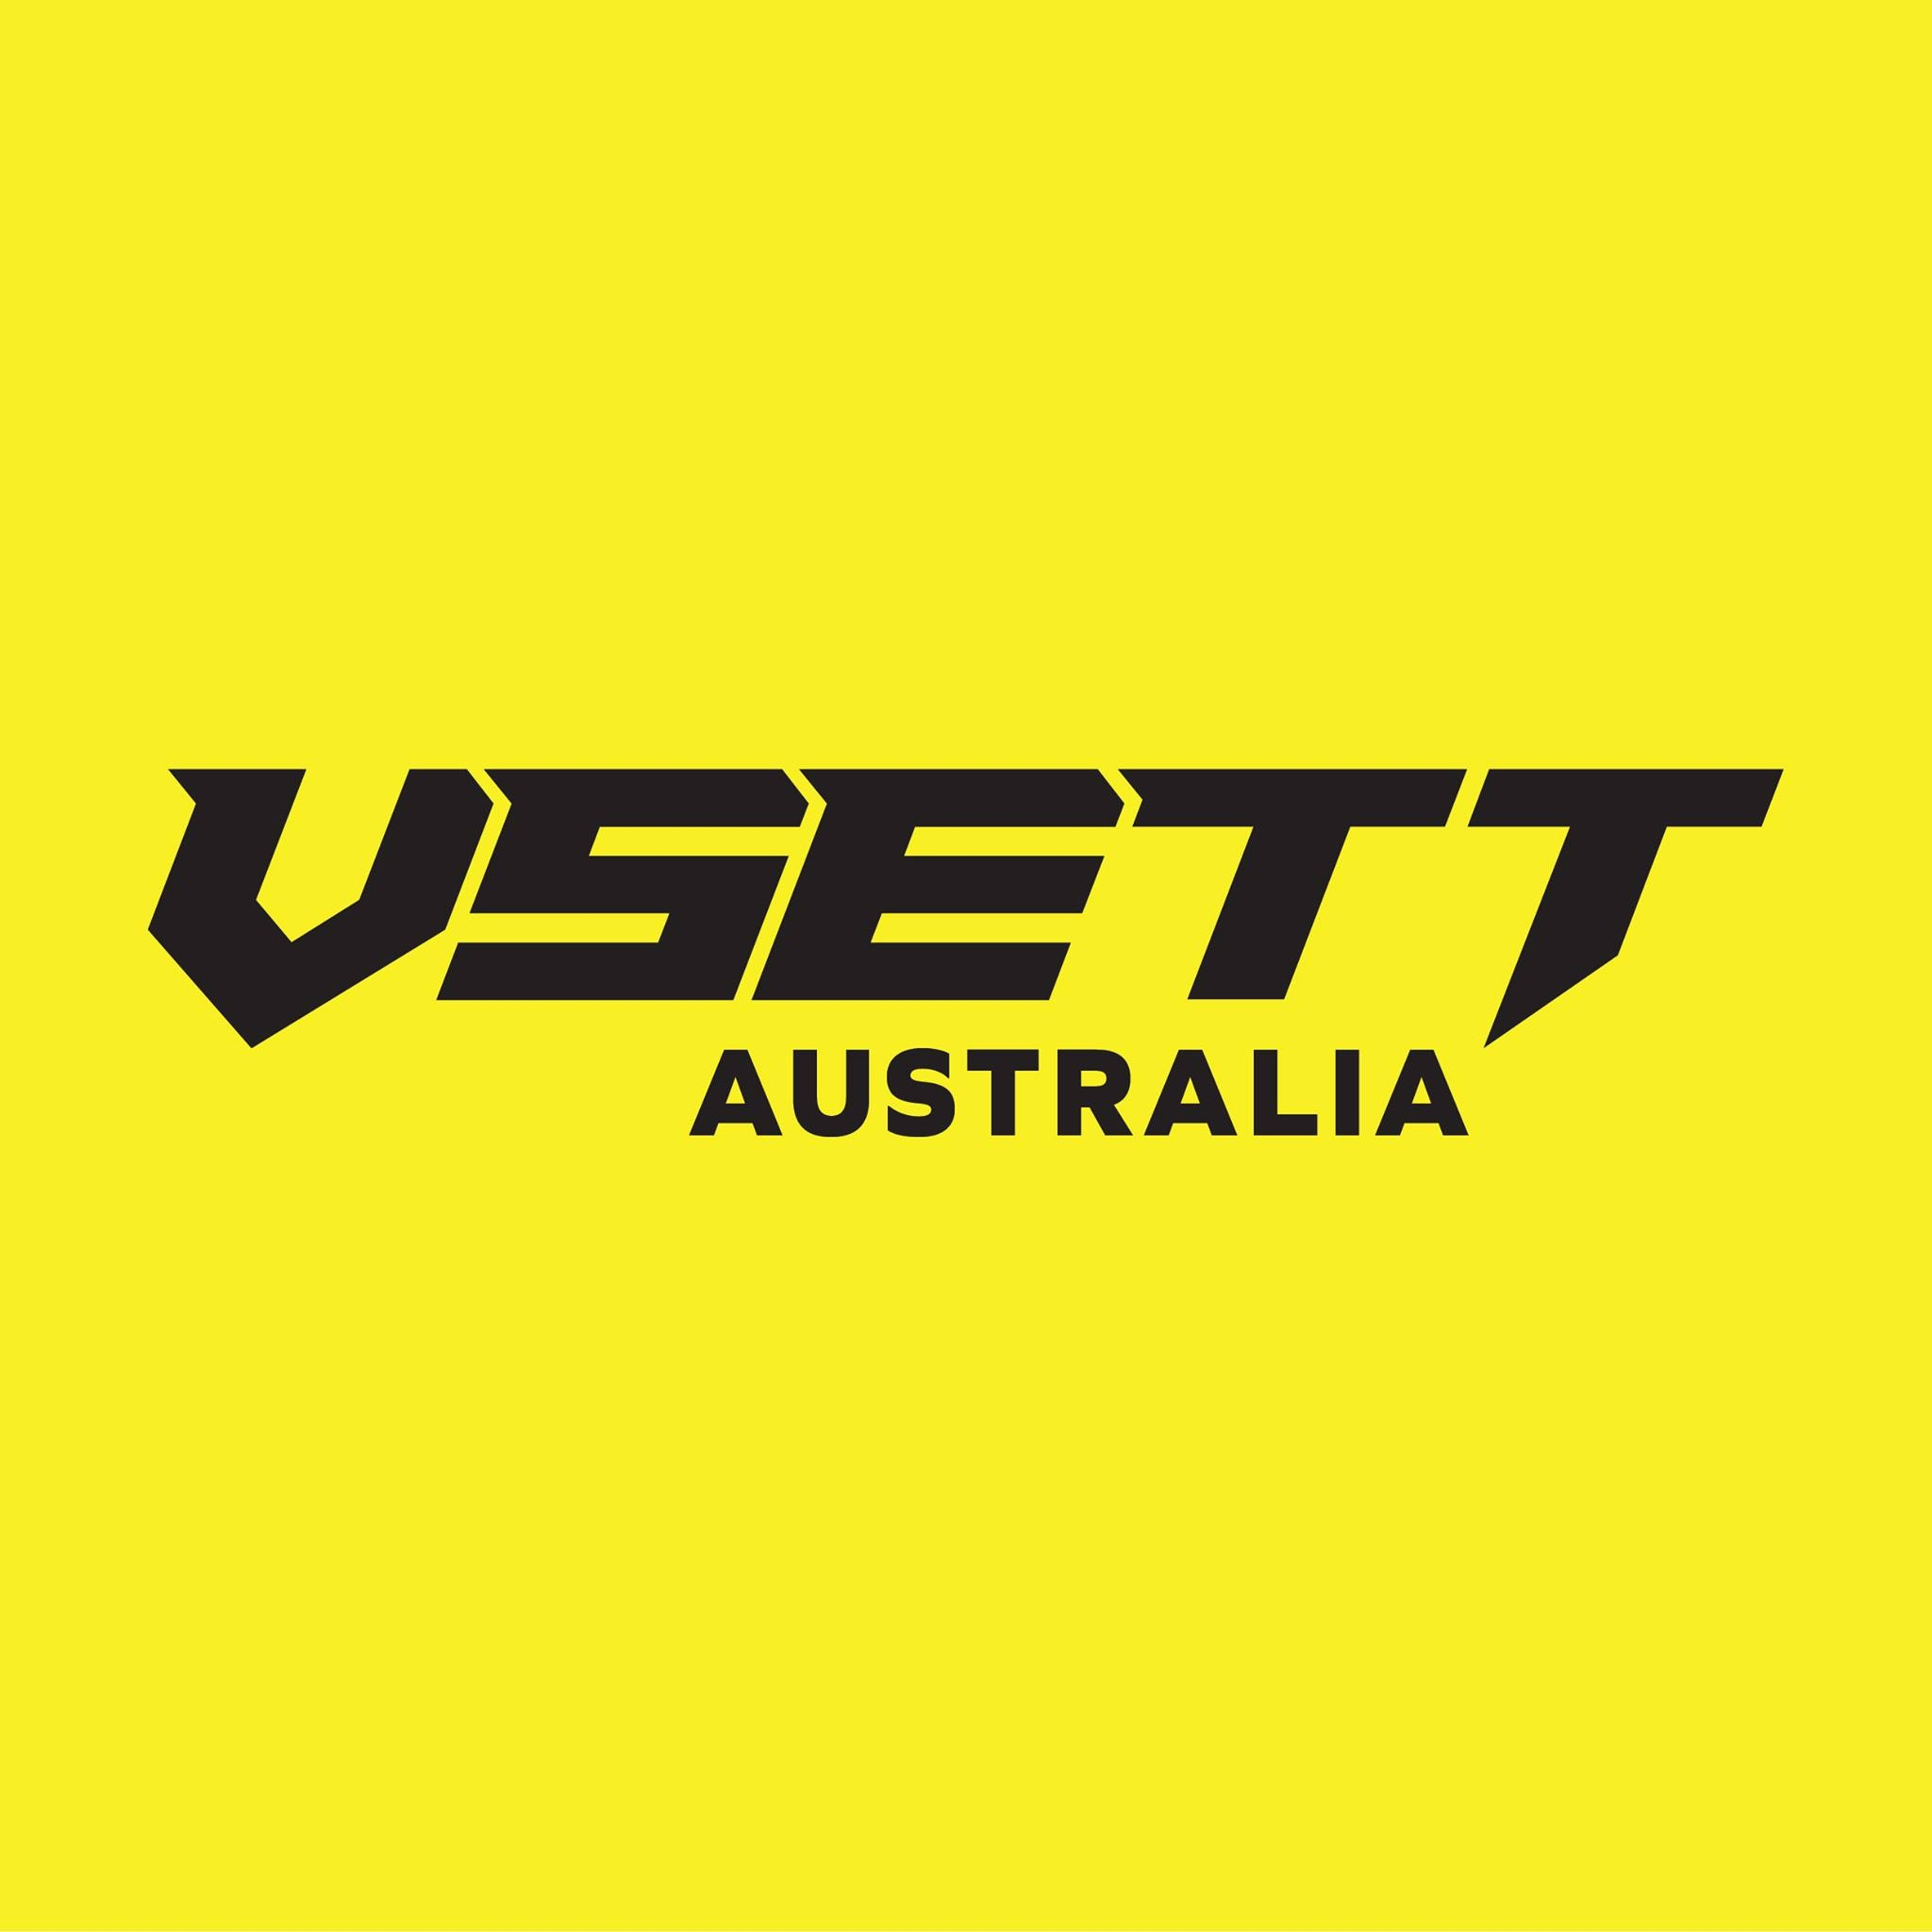 VSETT AUSTRALIA AUS Logo